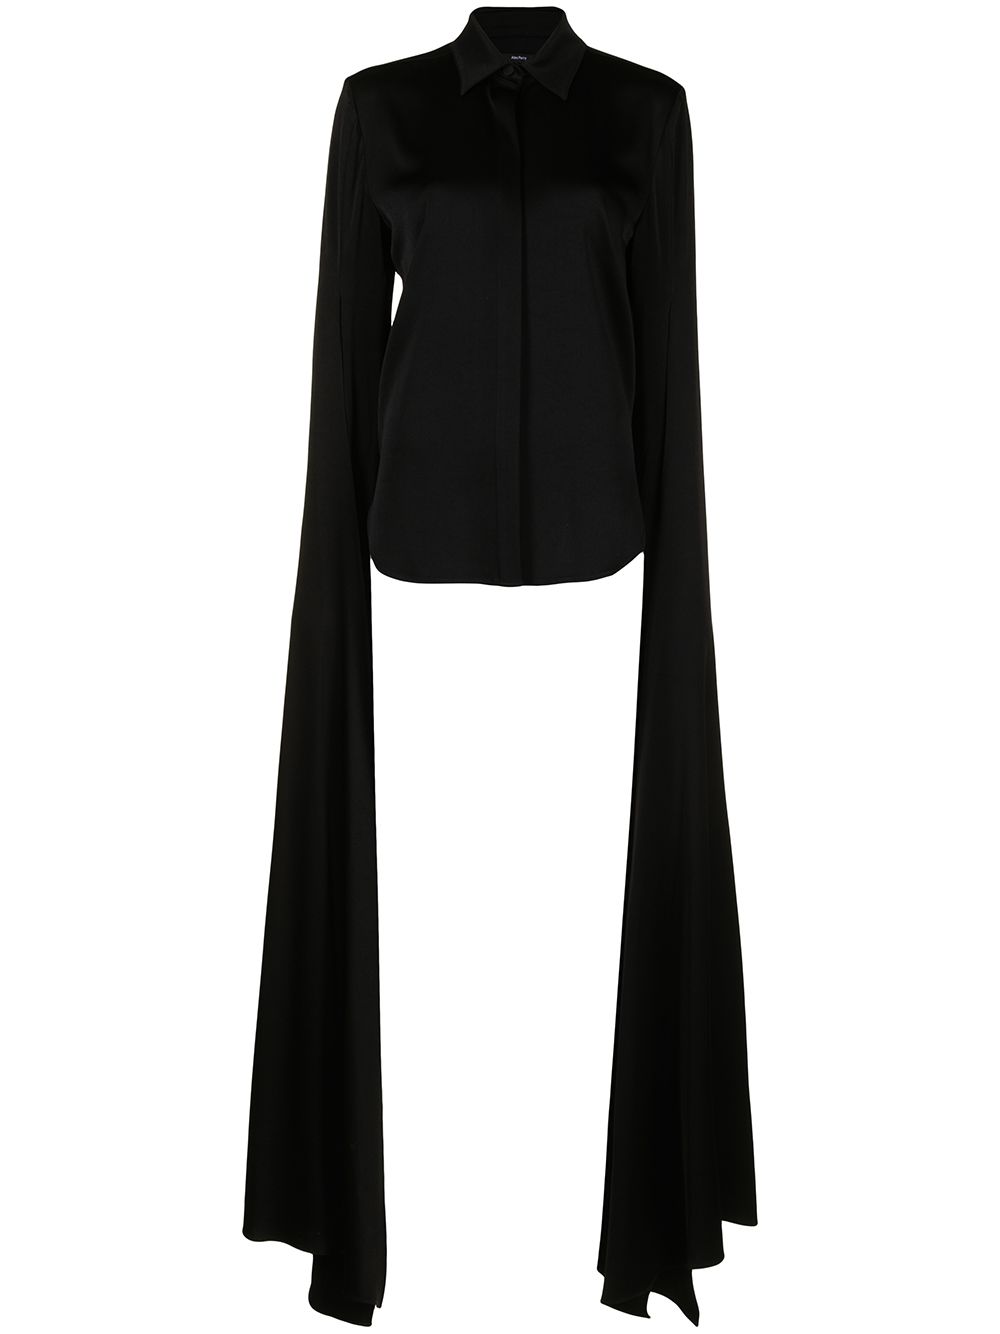 Alex Perry Floor-length Sleeve Satin Shirt In Black